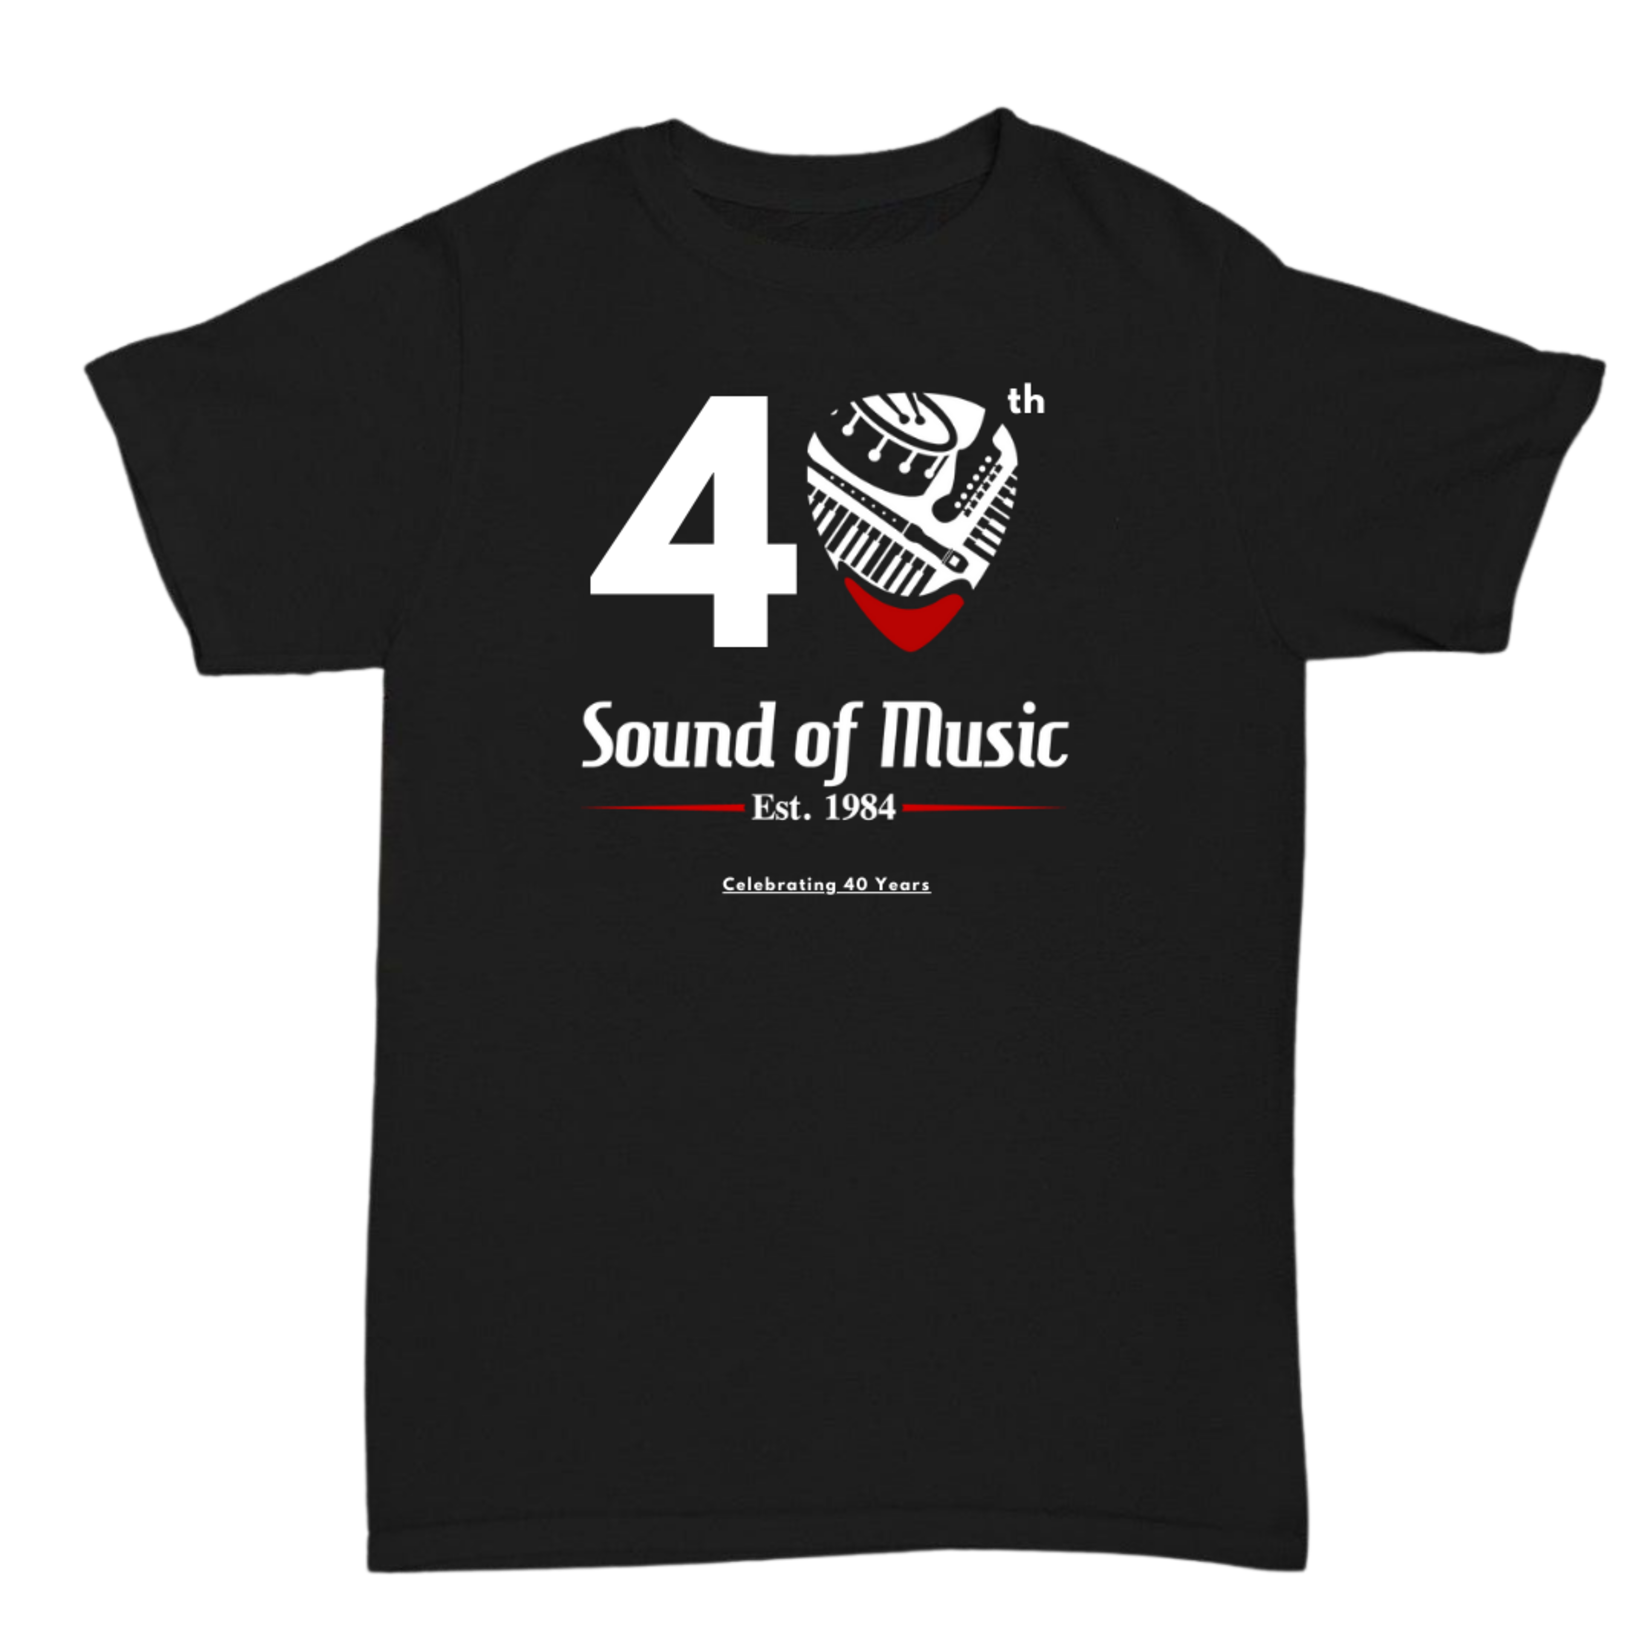 Sound of Music 40th Anniversary Shirt - XXXL